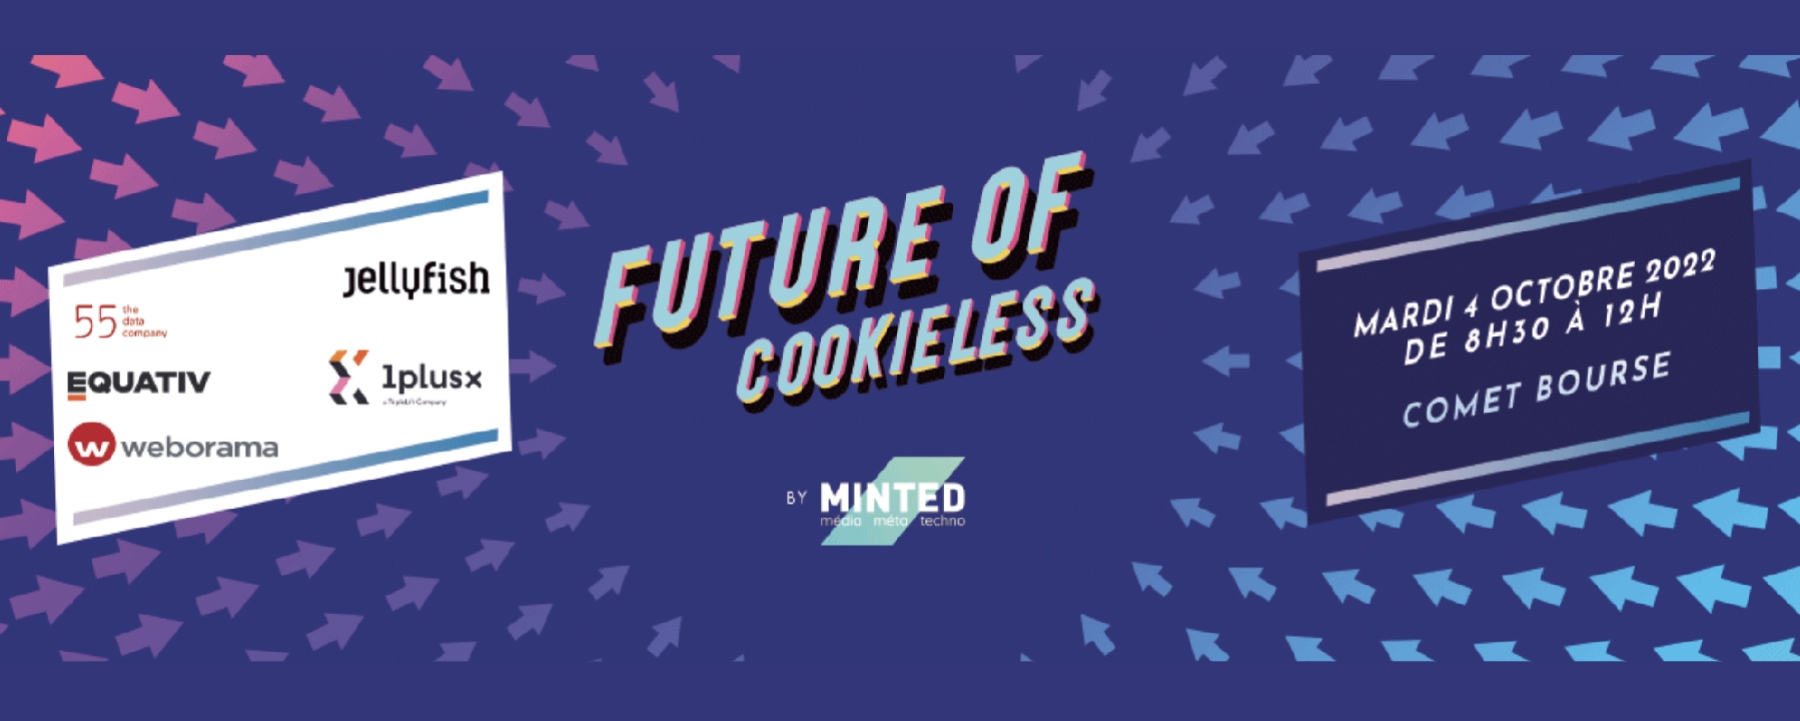 Future of Cookieless